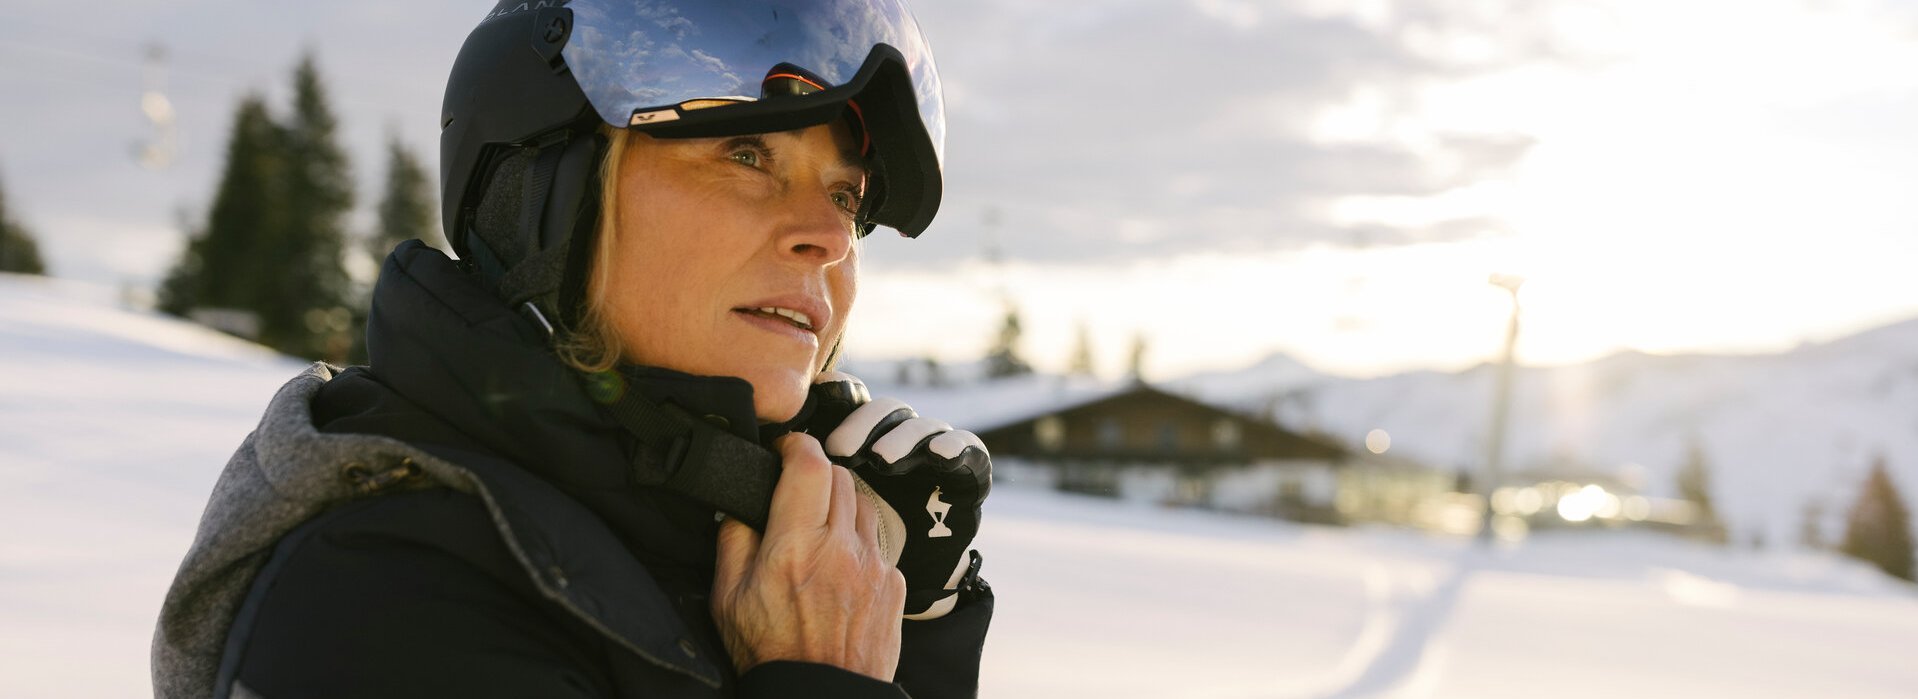 A mature lady in ski gear adjusts her helmet in a winter landscape